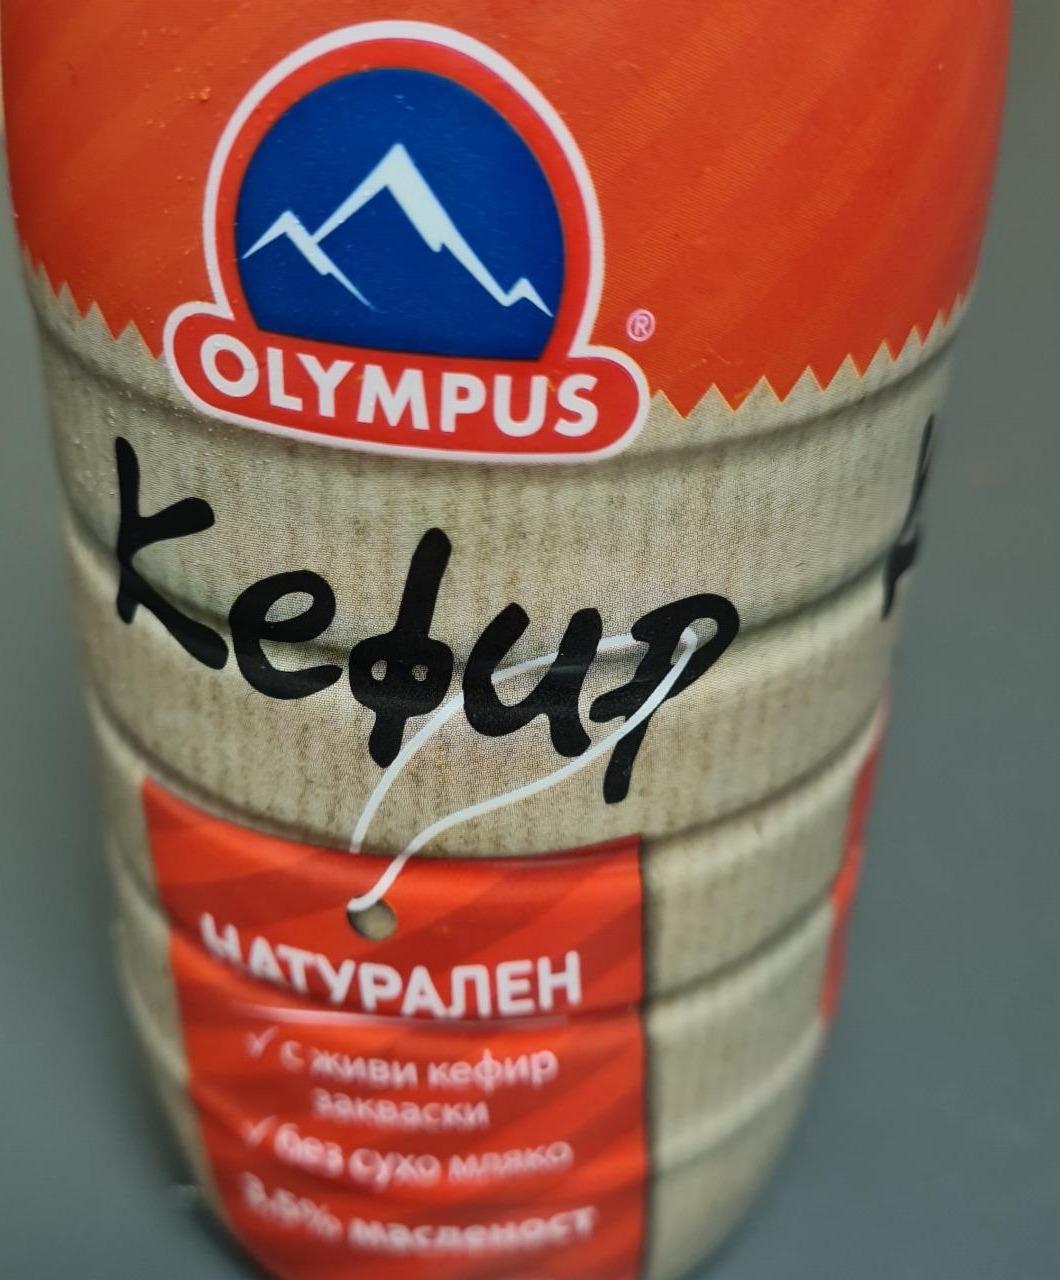 Zdjęcia - kefir naturalny olympus